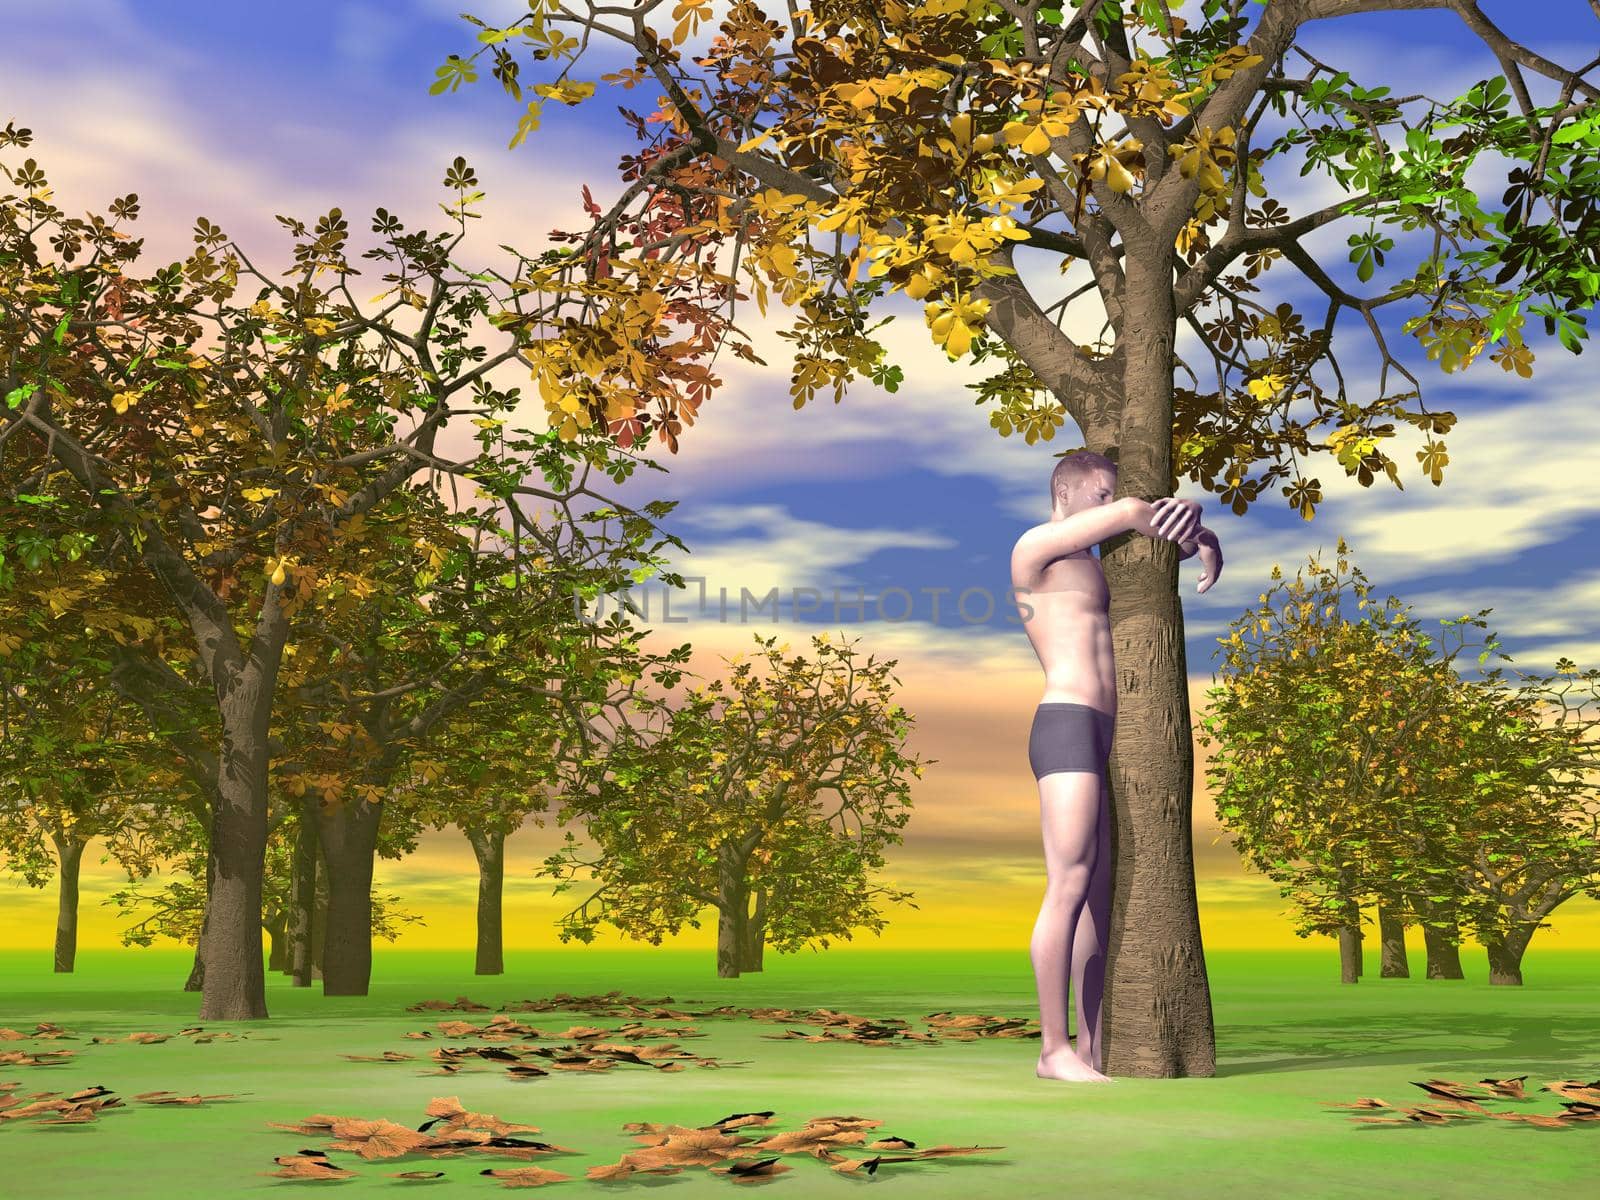 Man hugging a tree - 3D render by Elenaphotos21